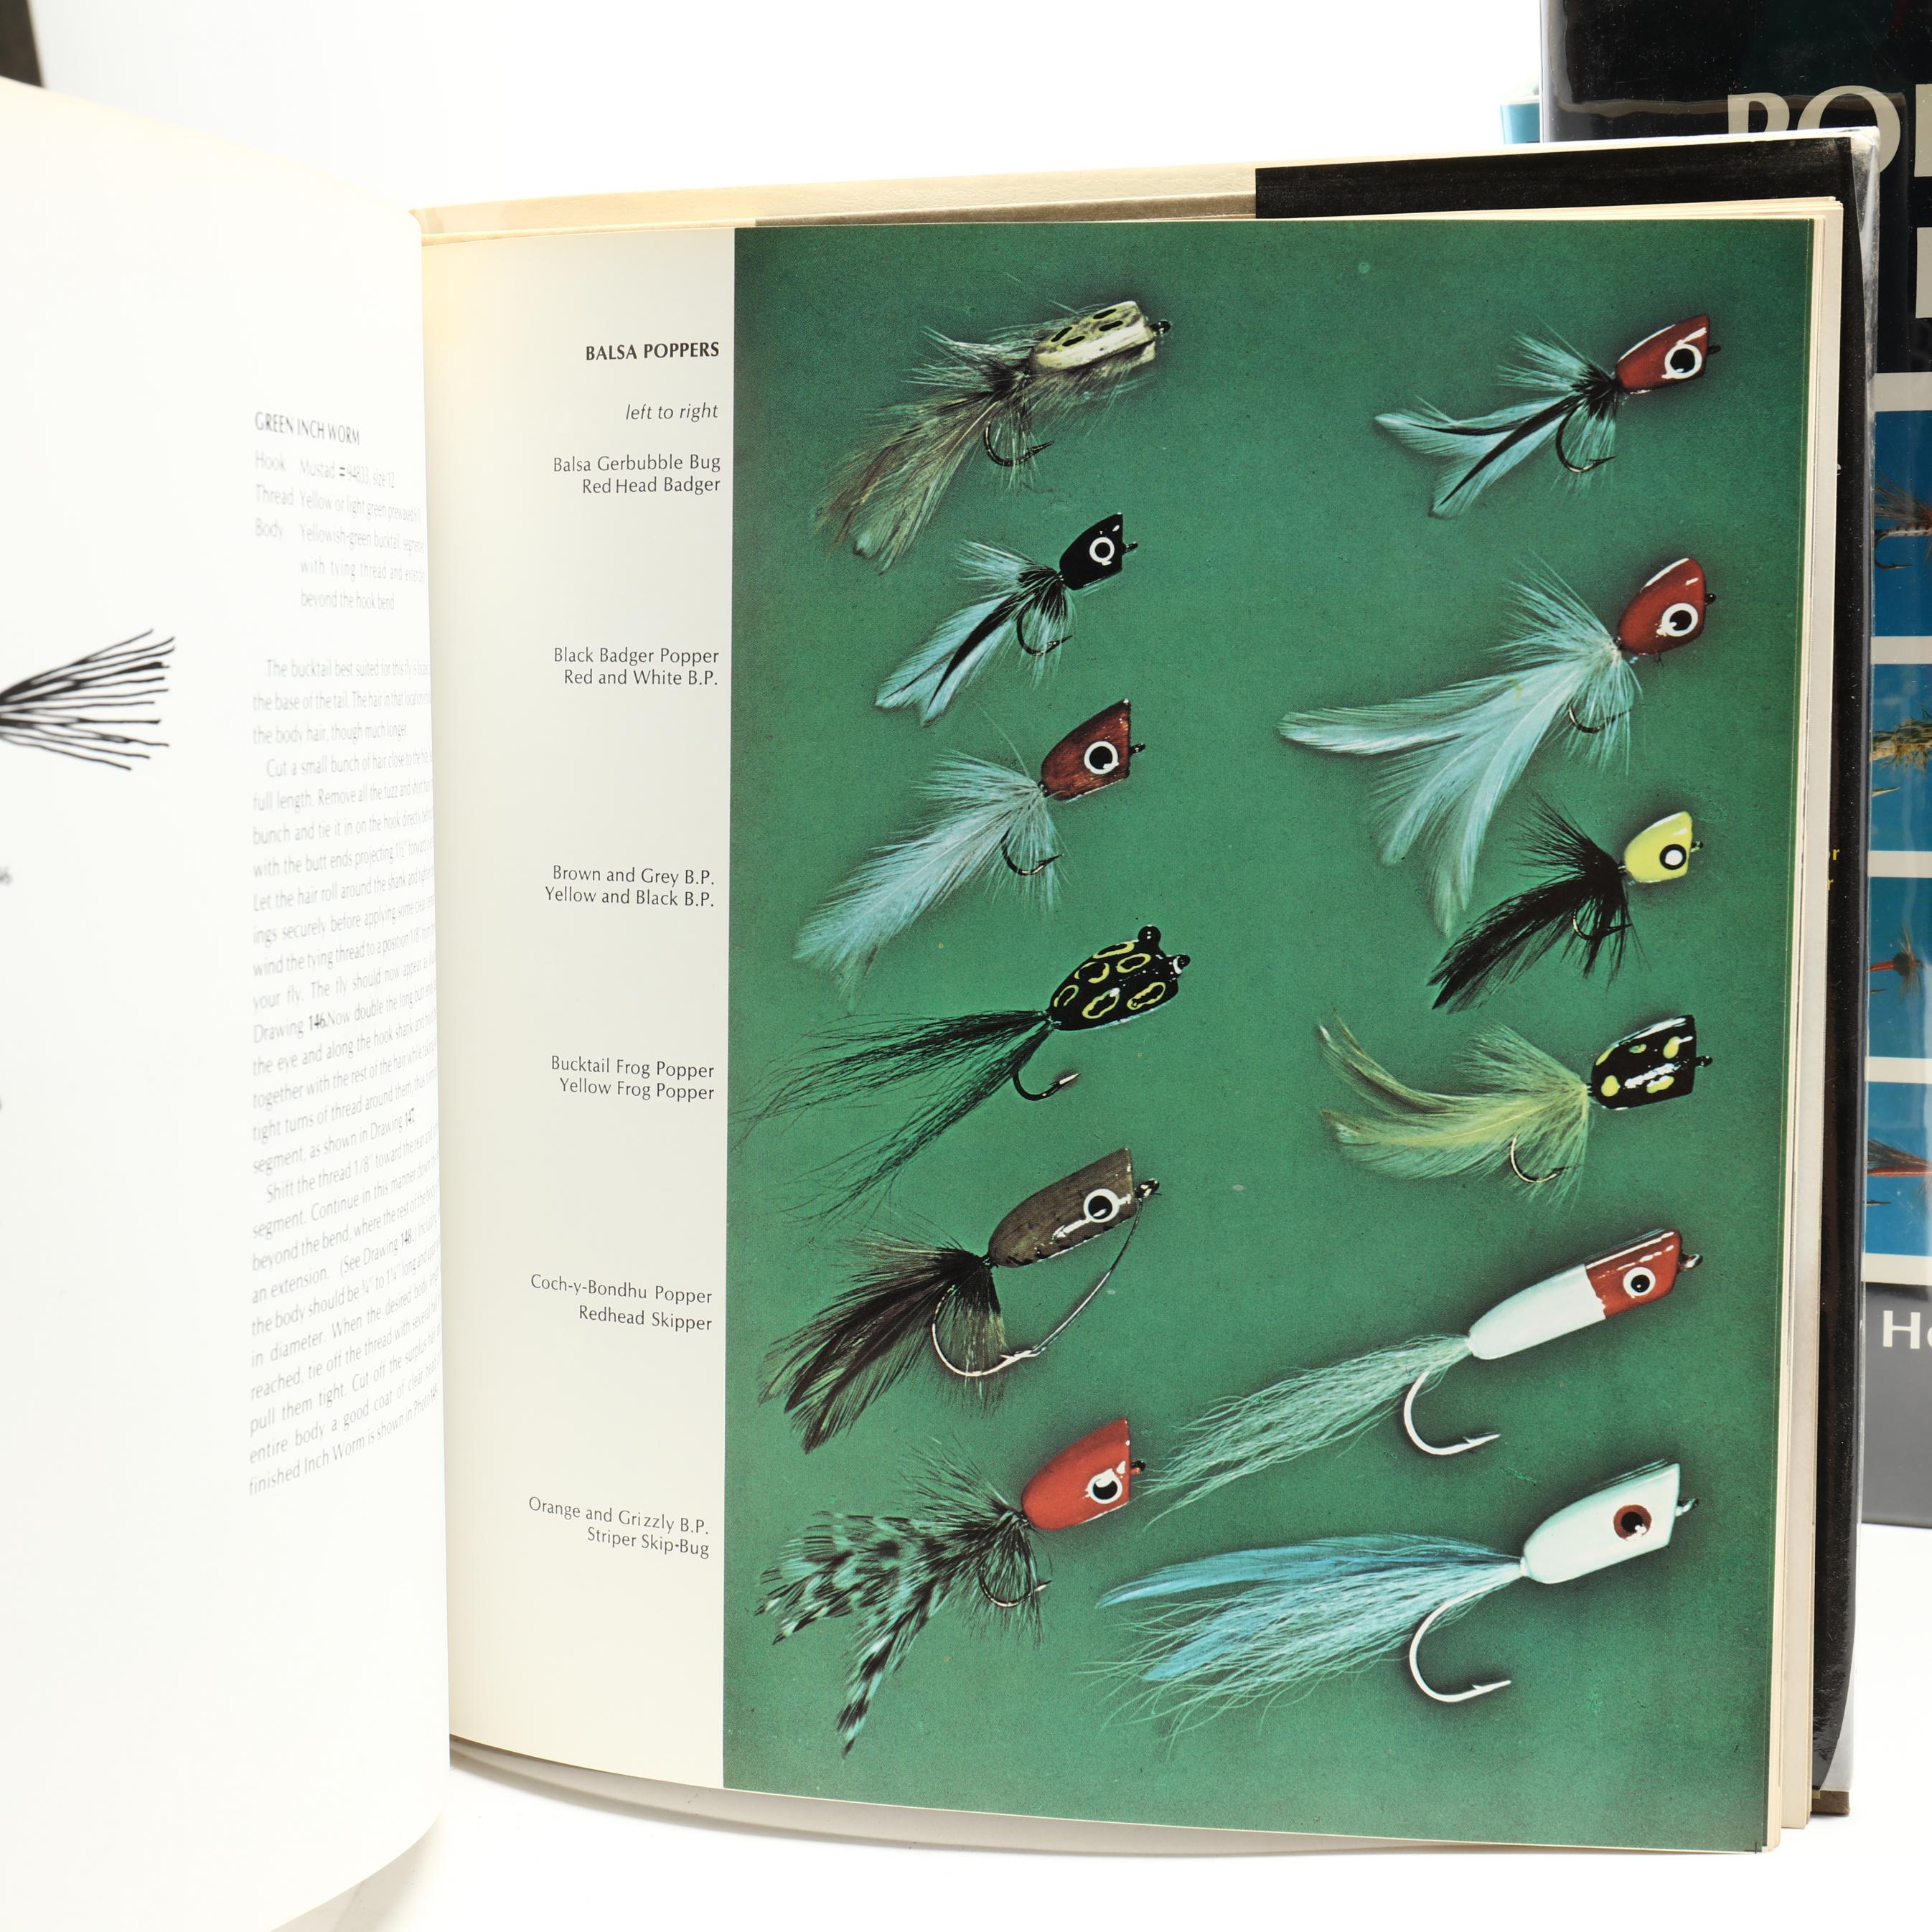 Thirteen Fly Fishing Books (Lot 1348 - The Winter Decoy & Sporting